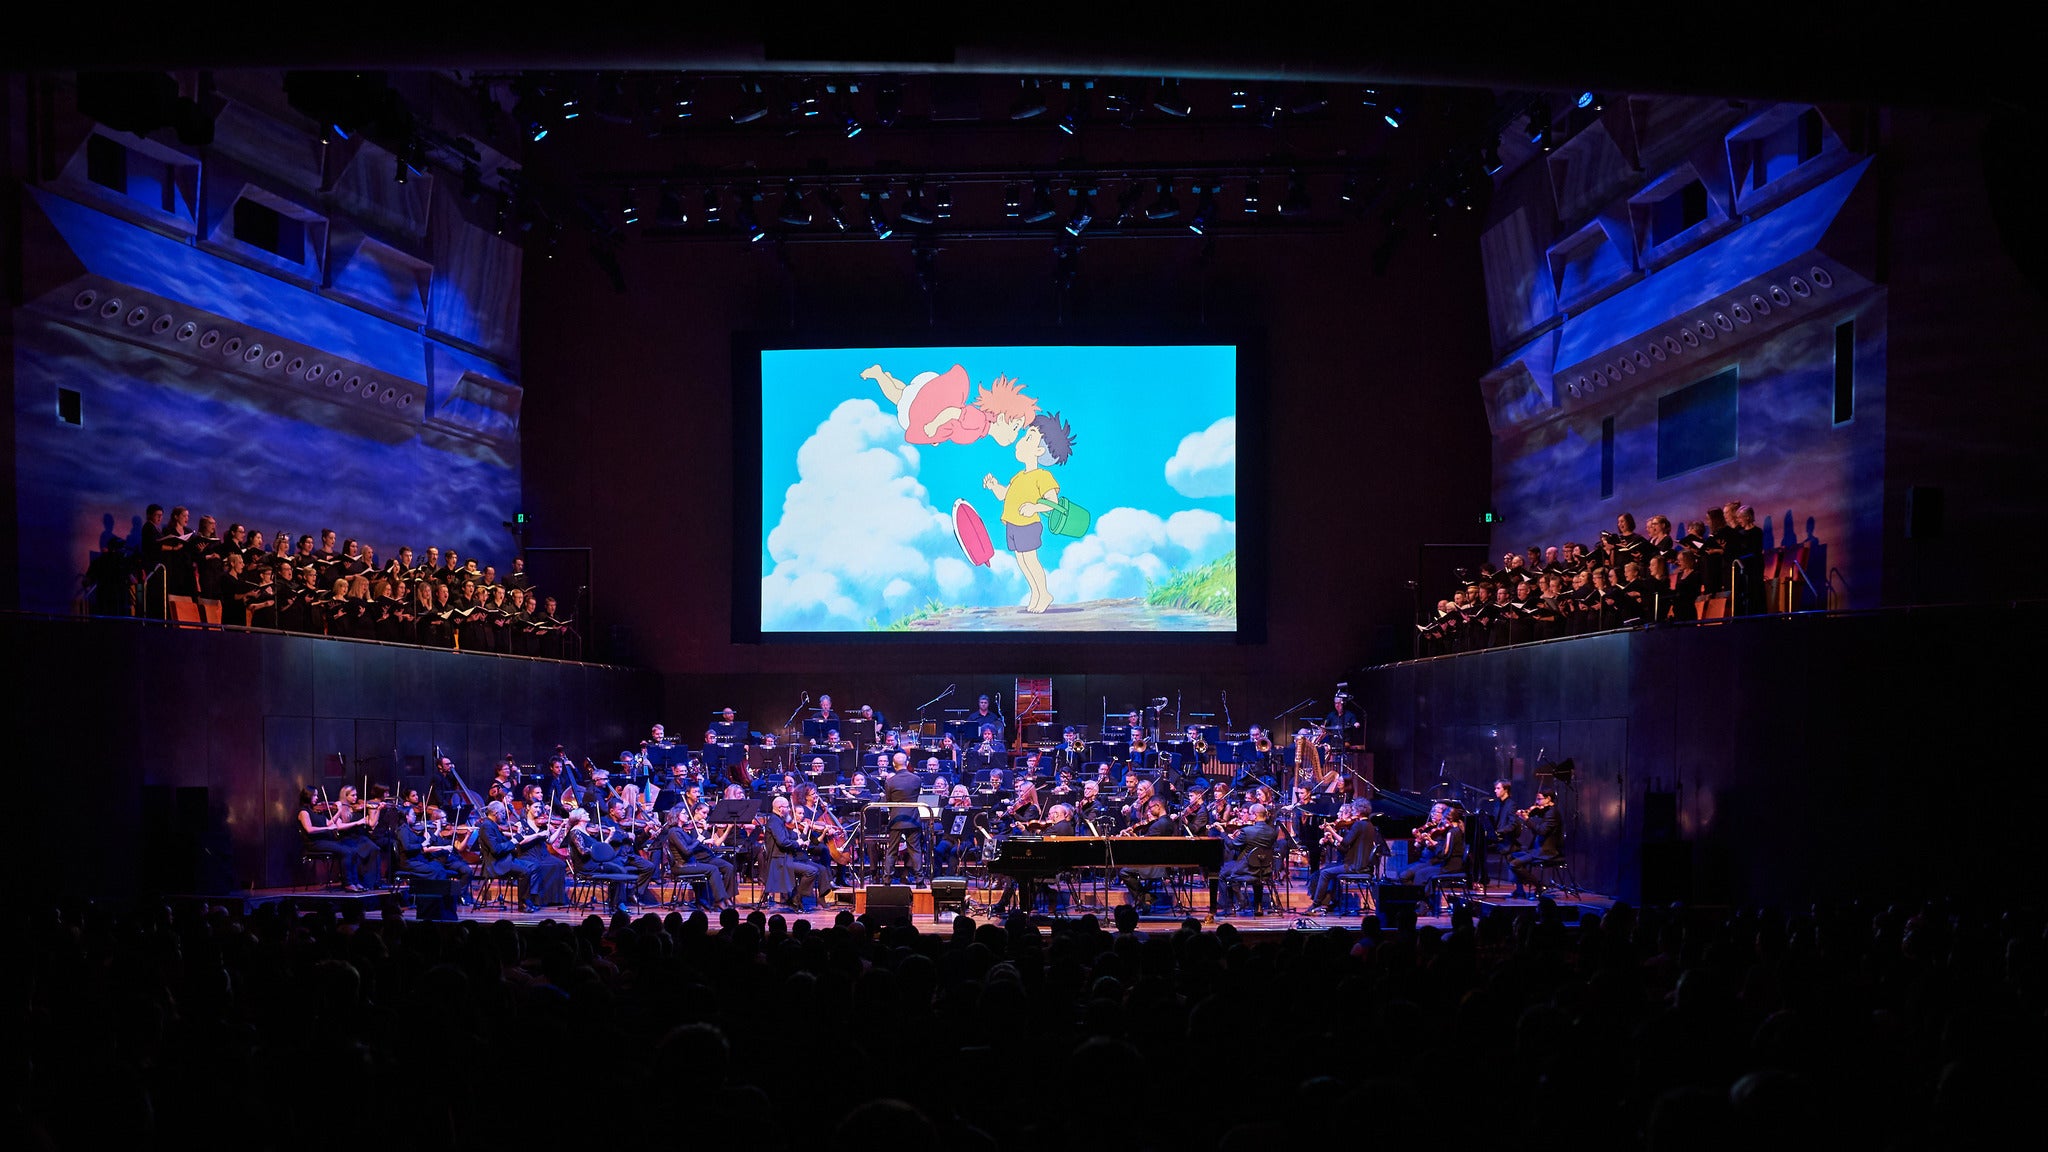 Joe Hisaishi Symphonic Concert The Music of Studio Ghibli at SSE Arena